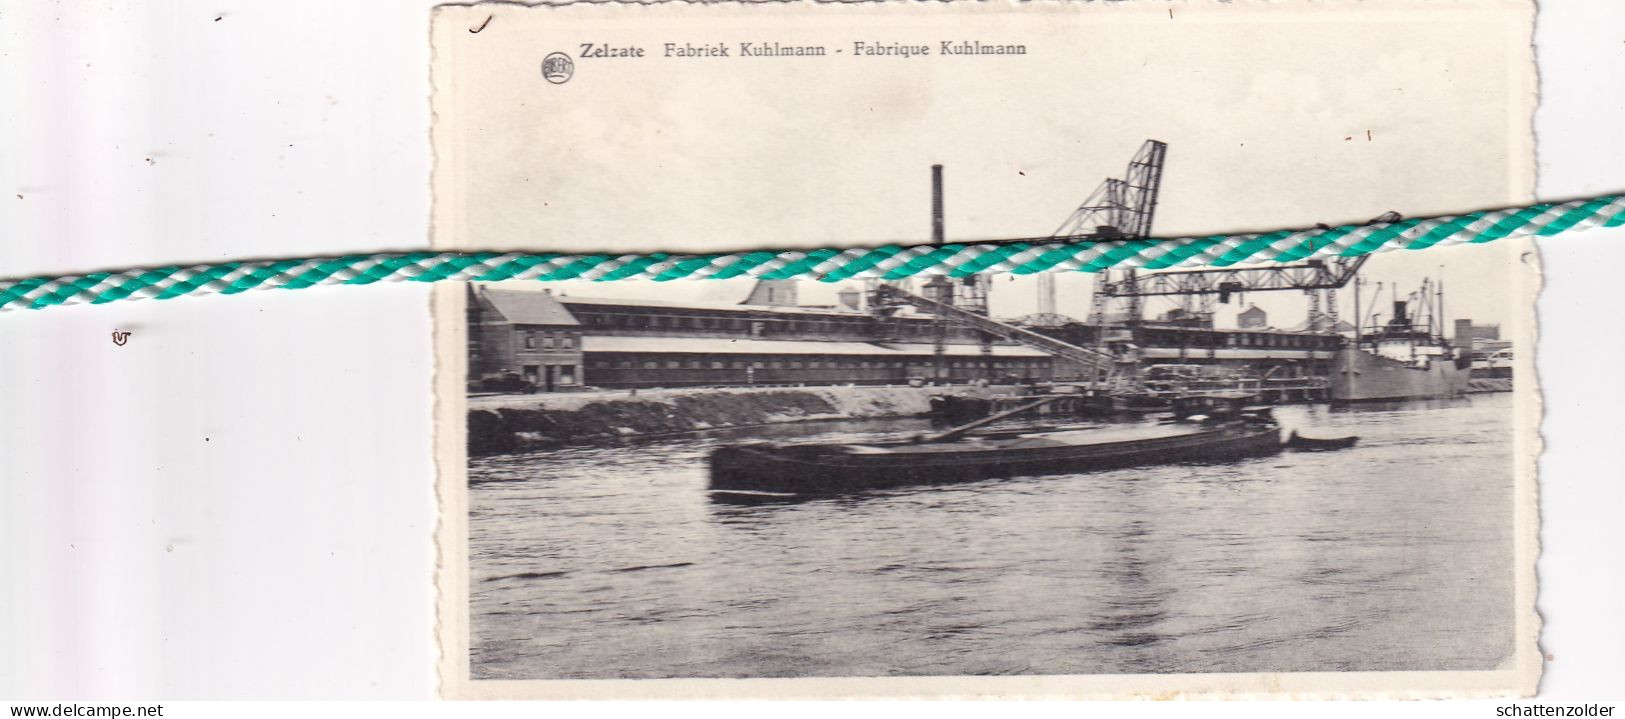 Zelzate, Fabriek Kuhlmann - Zelzate